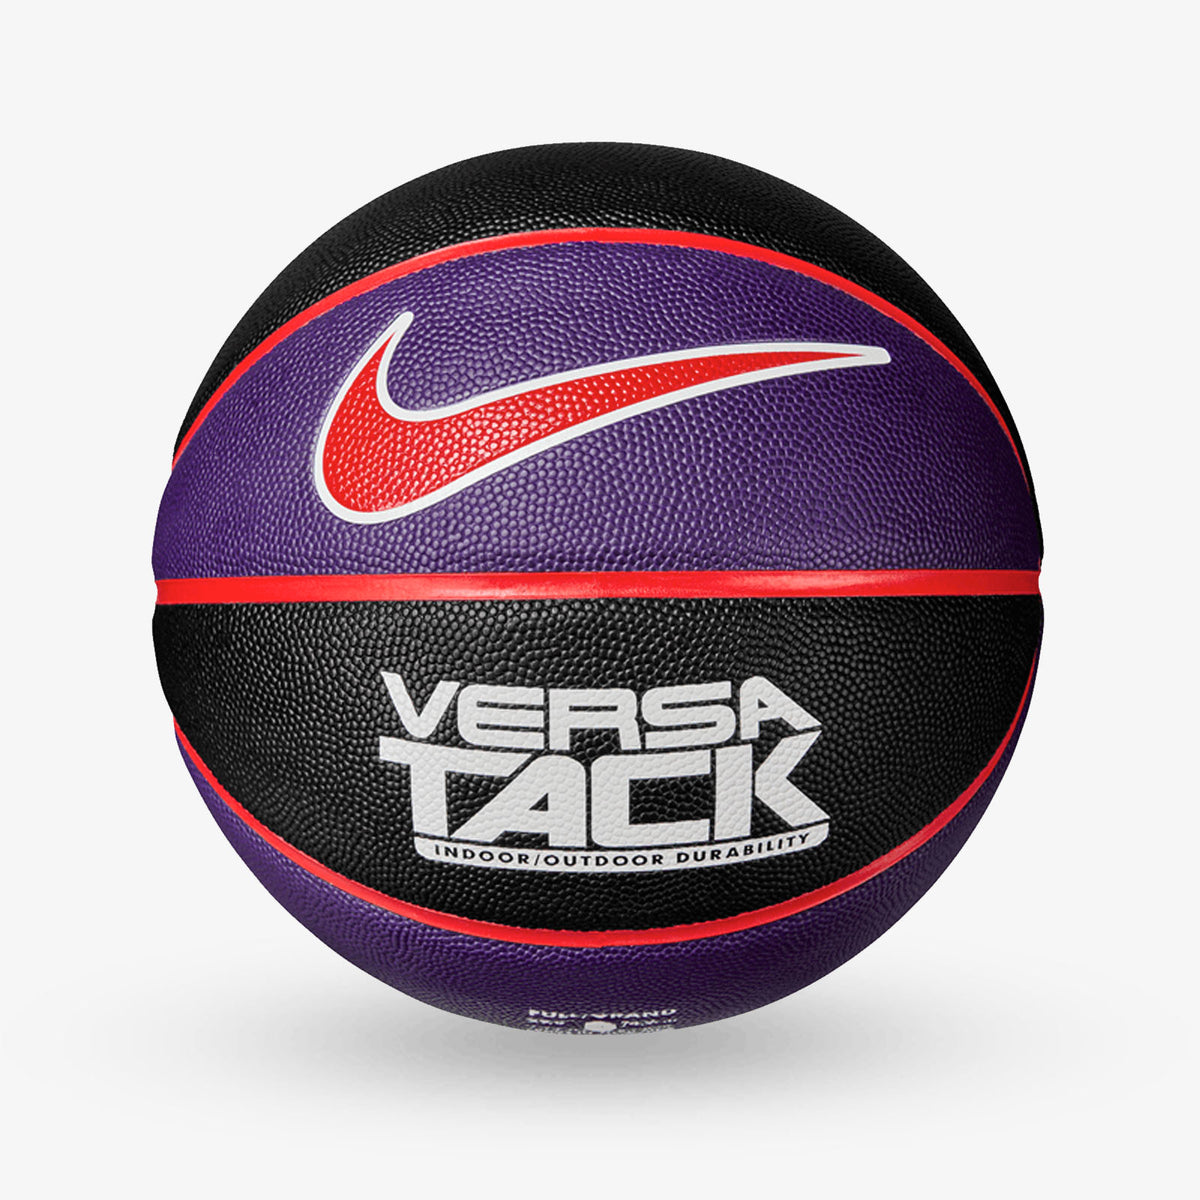 Nike Versa Tack Indoor/Outdoor Basketball - Black/Purple - Size 7